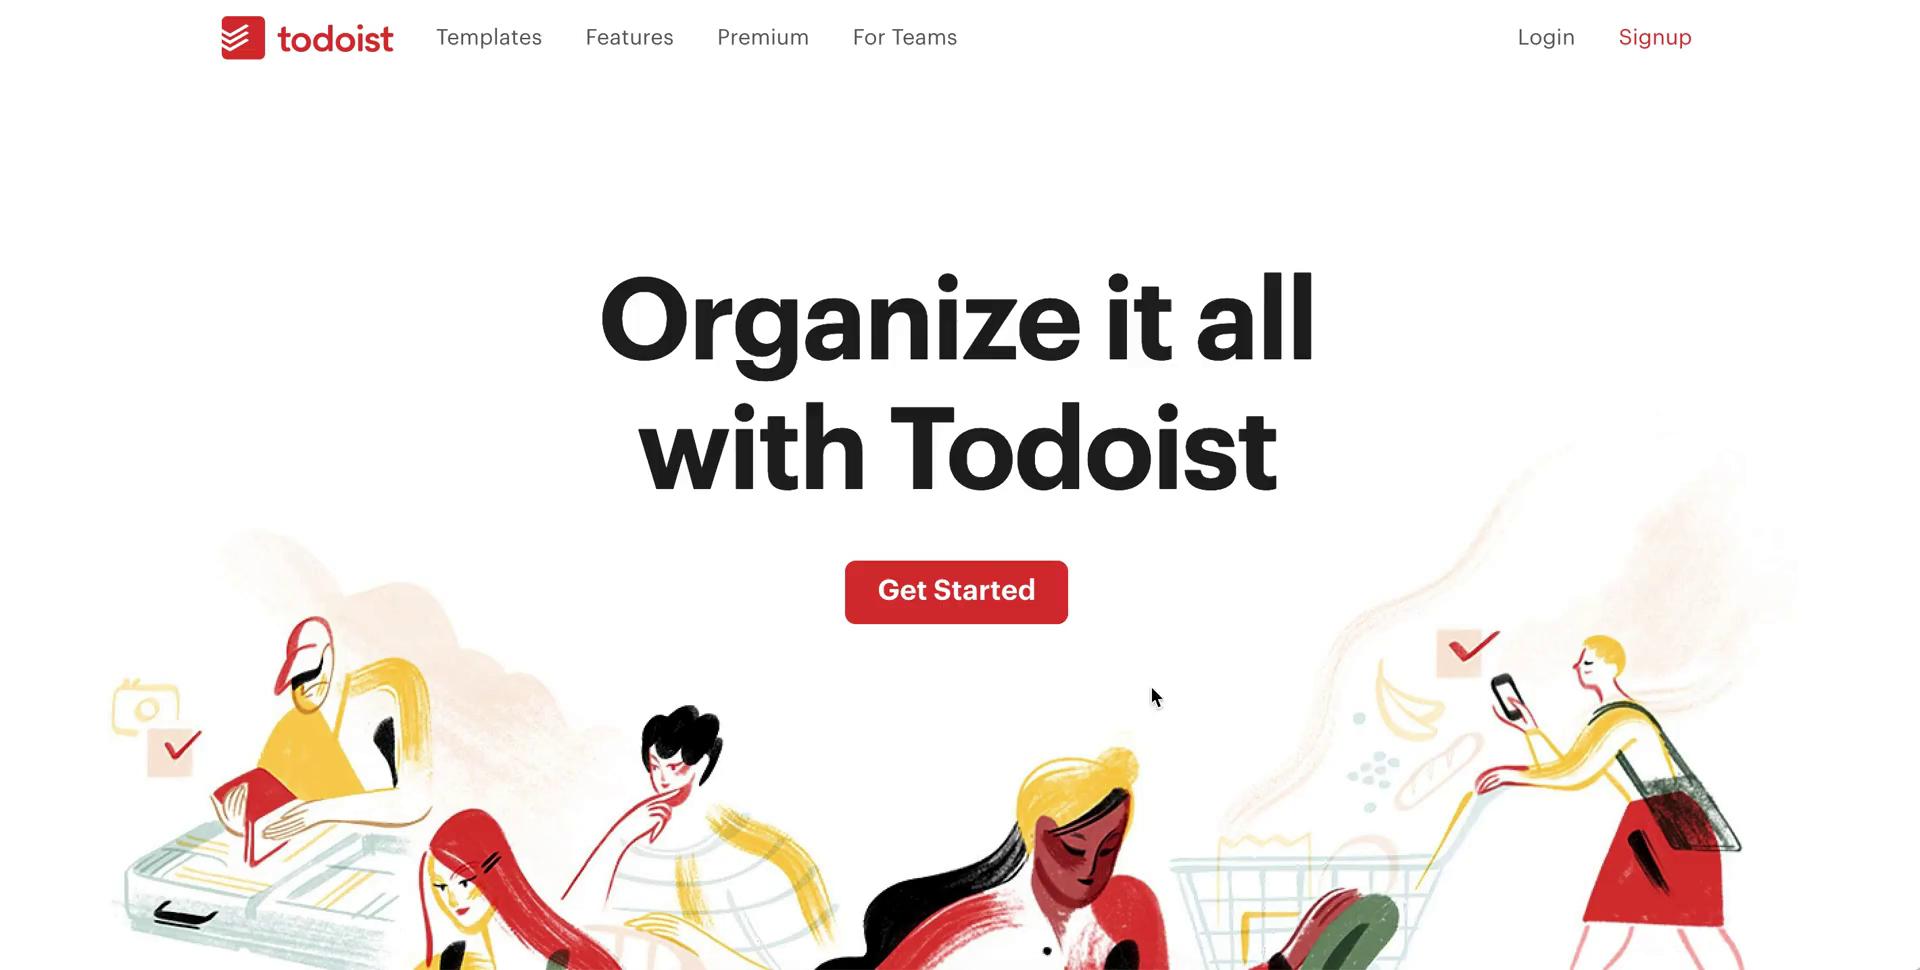 Todoist homepage screenshot